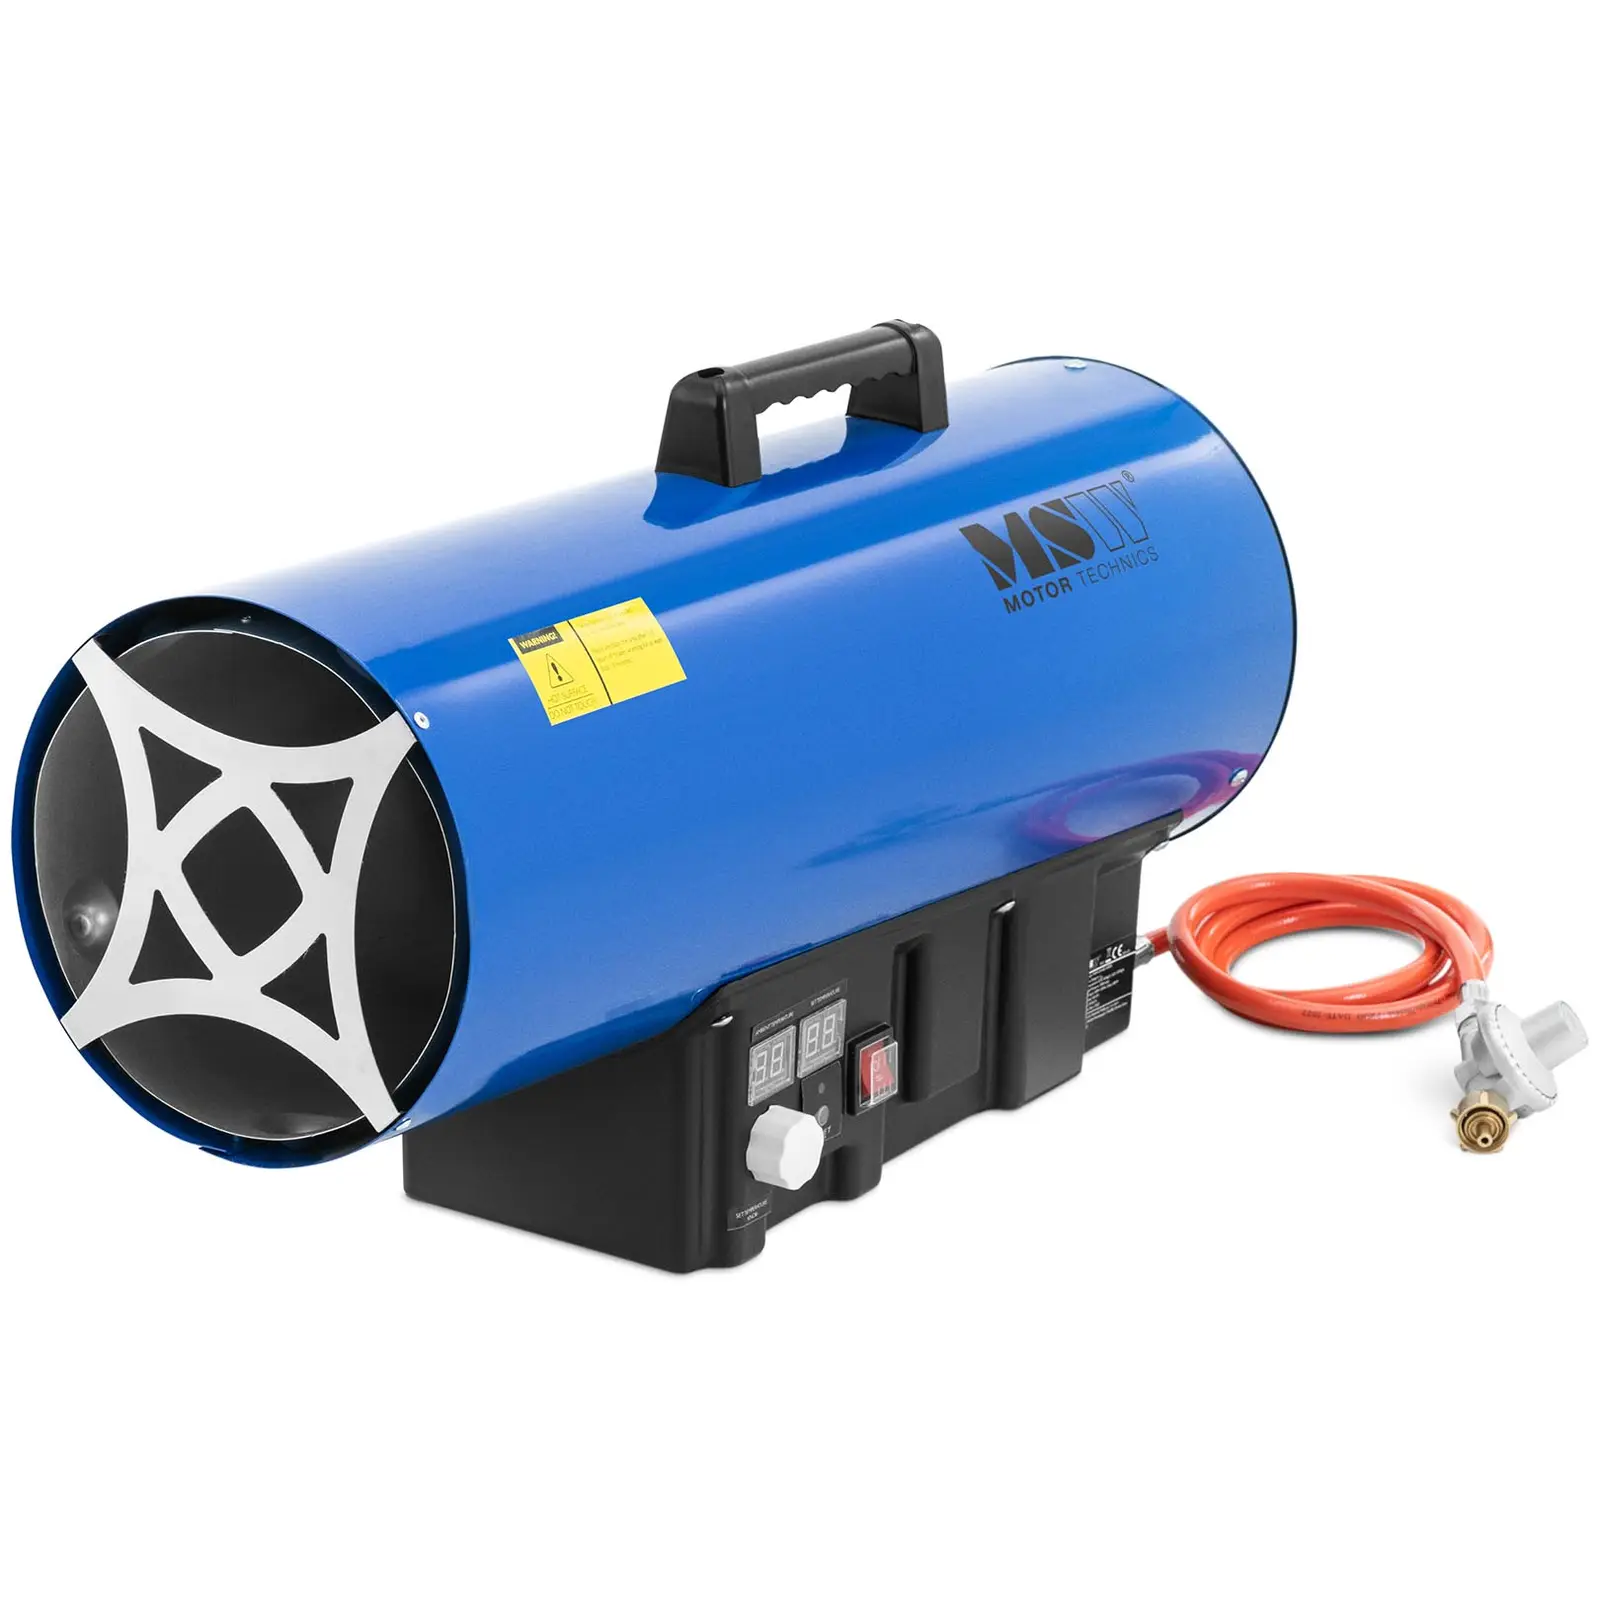 Portable Gas Heater - 50000 W - 510 m²